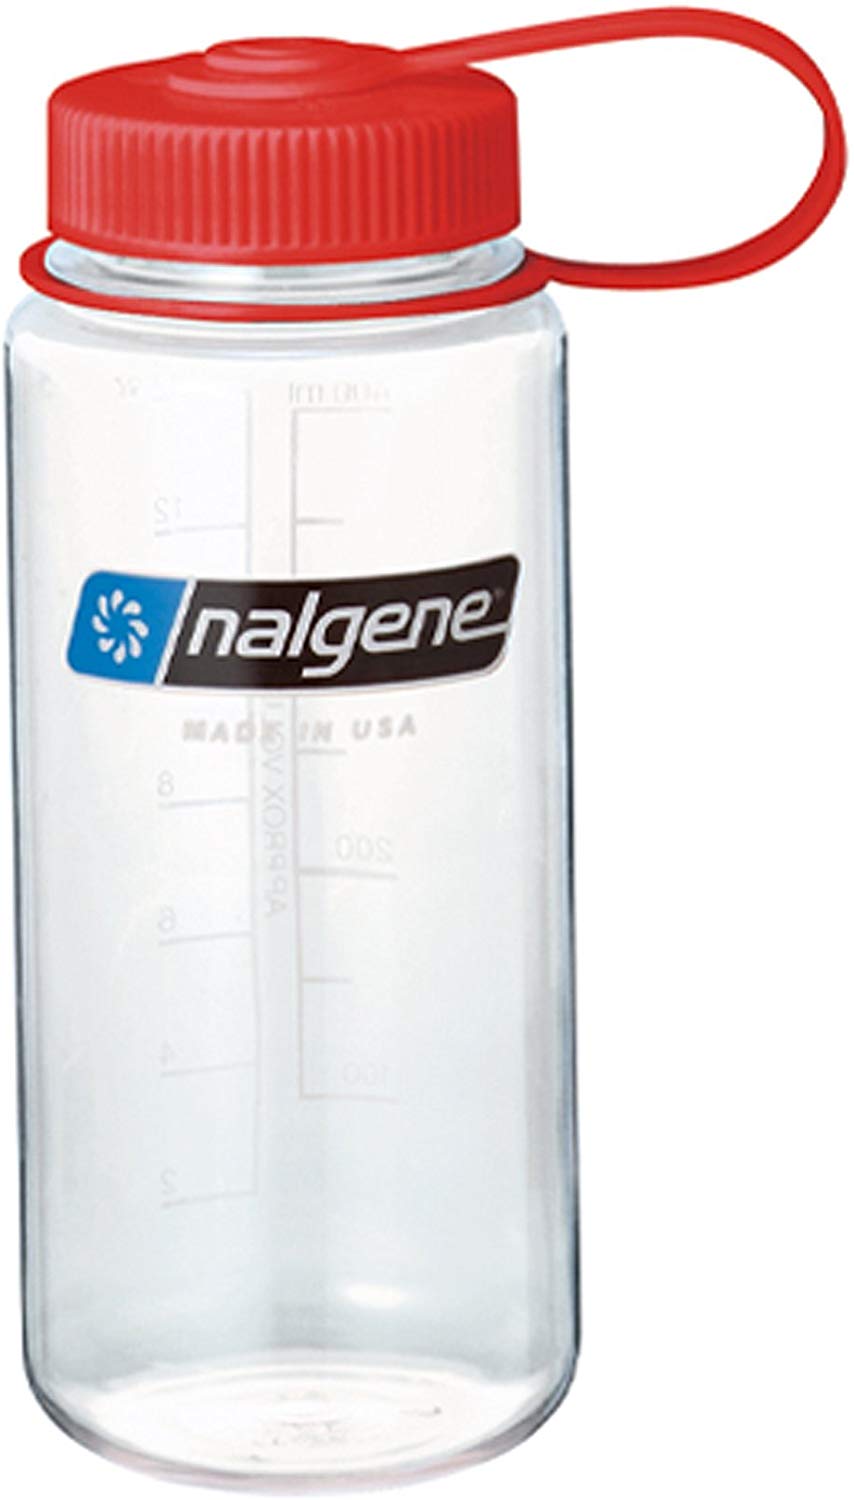 Nalgene Tritan BPA-Free 16-Ounce Reusable Water Bottle